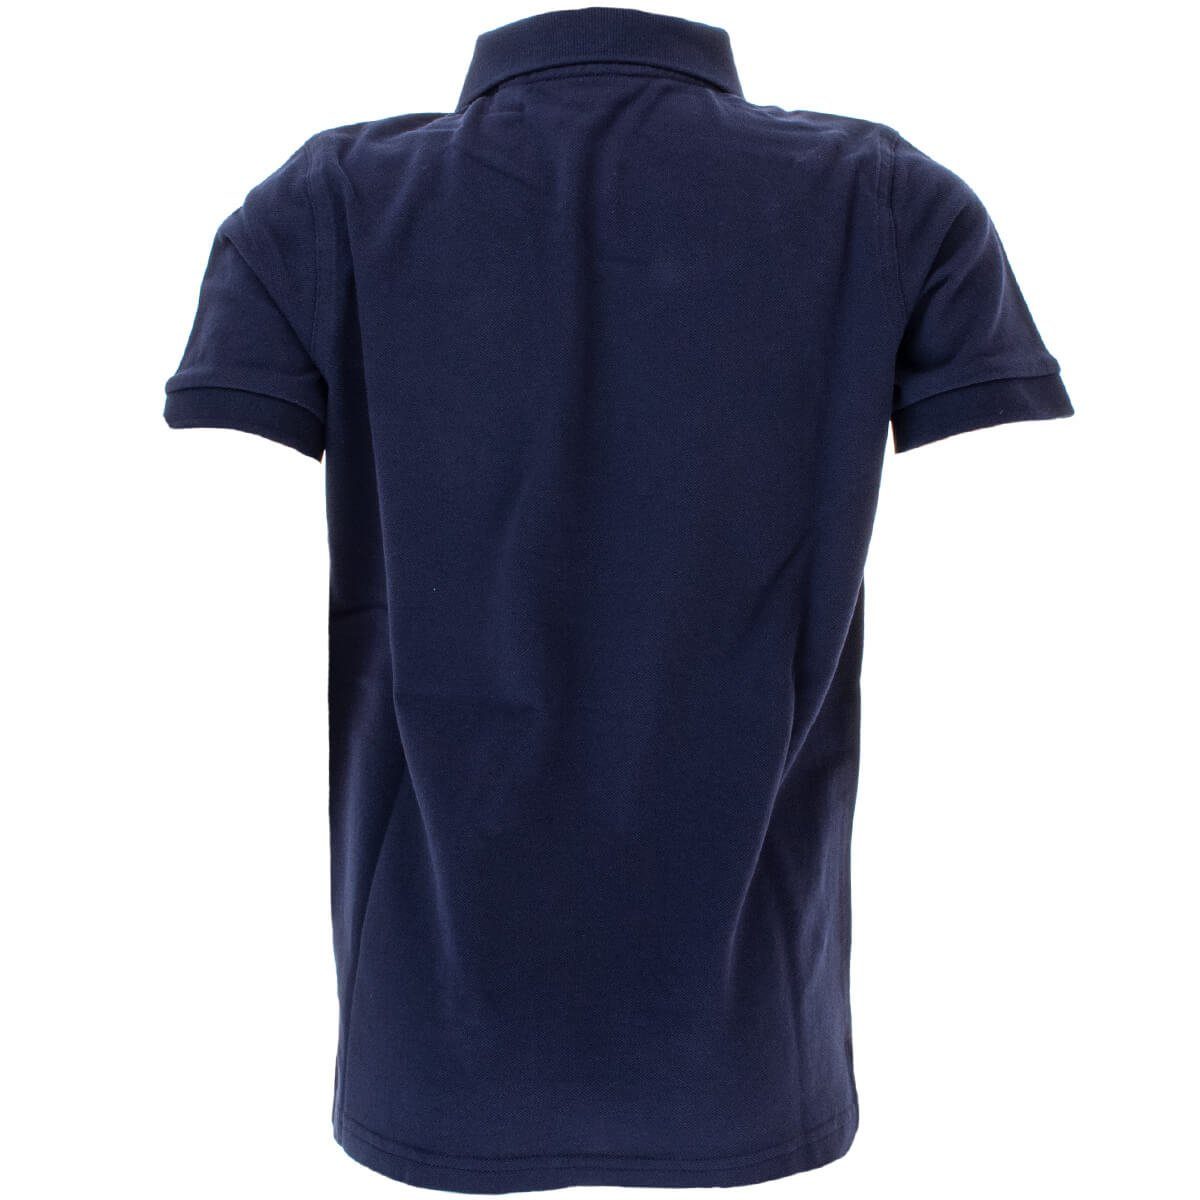 Gant aus Unisex 902201 Kinder Blau(433) Original Baumwolle Poloshirt Poloshirt Pique